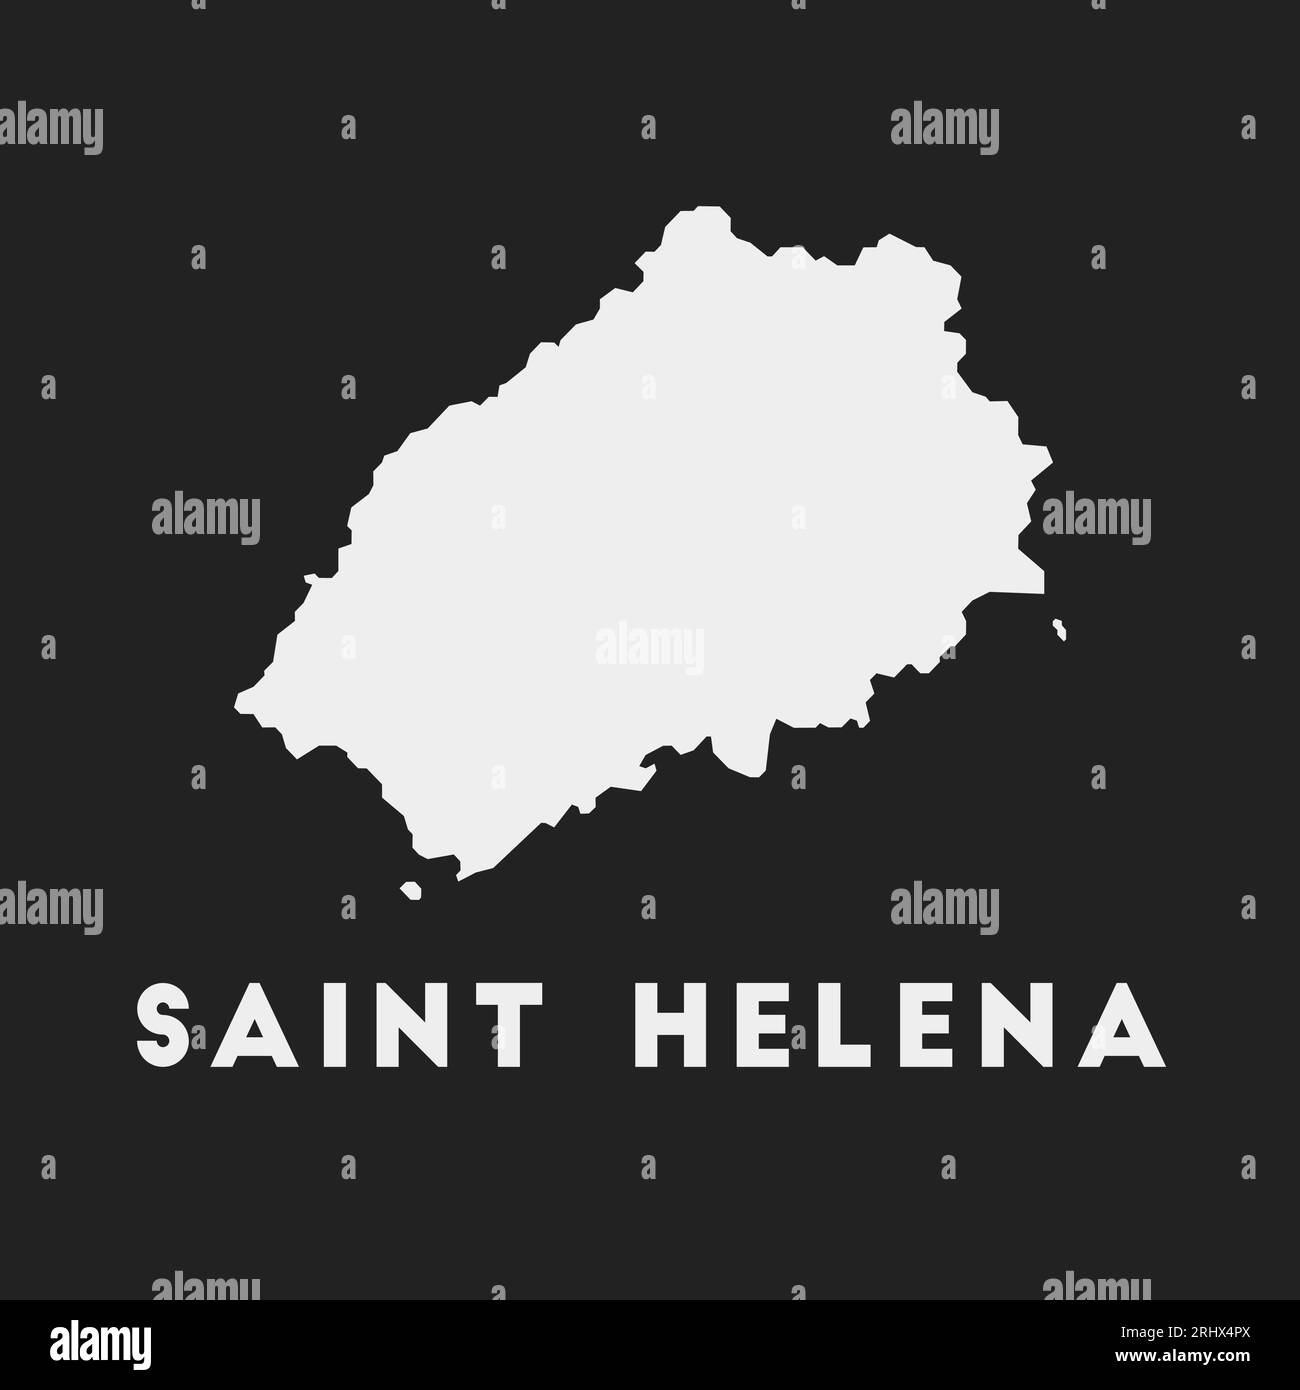 Saint Helena icon. Island map on dark background. Stylish Saint Helena